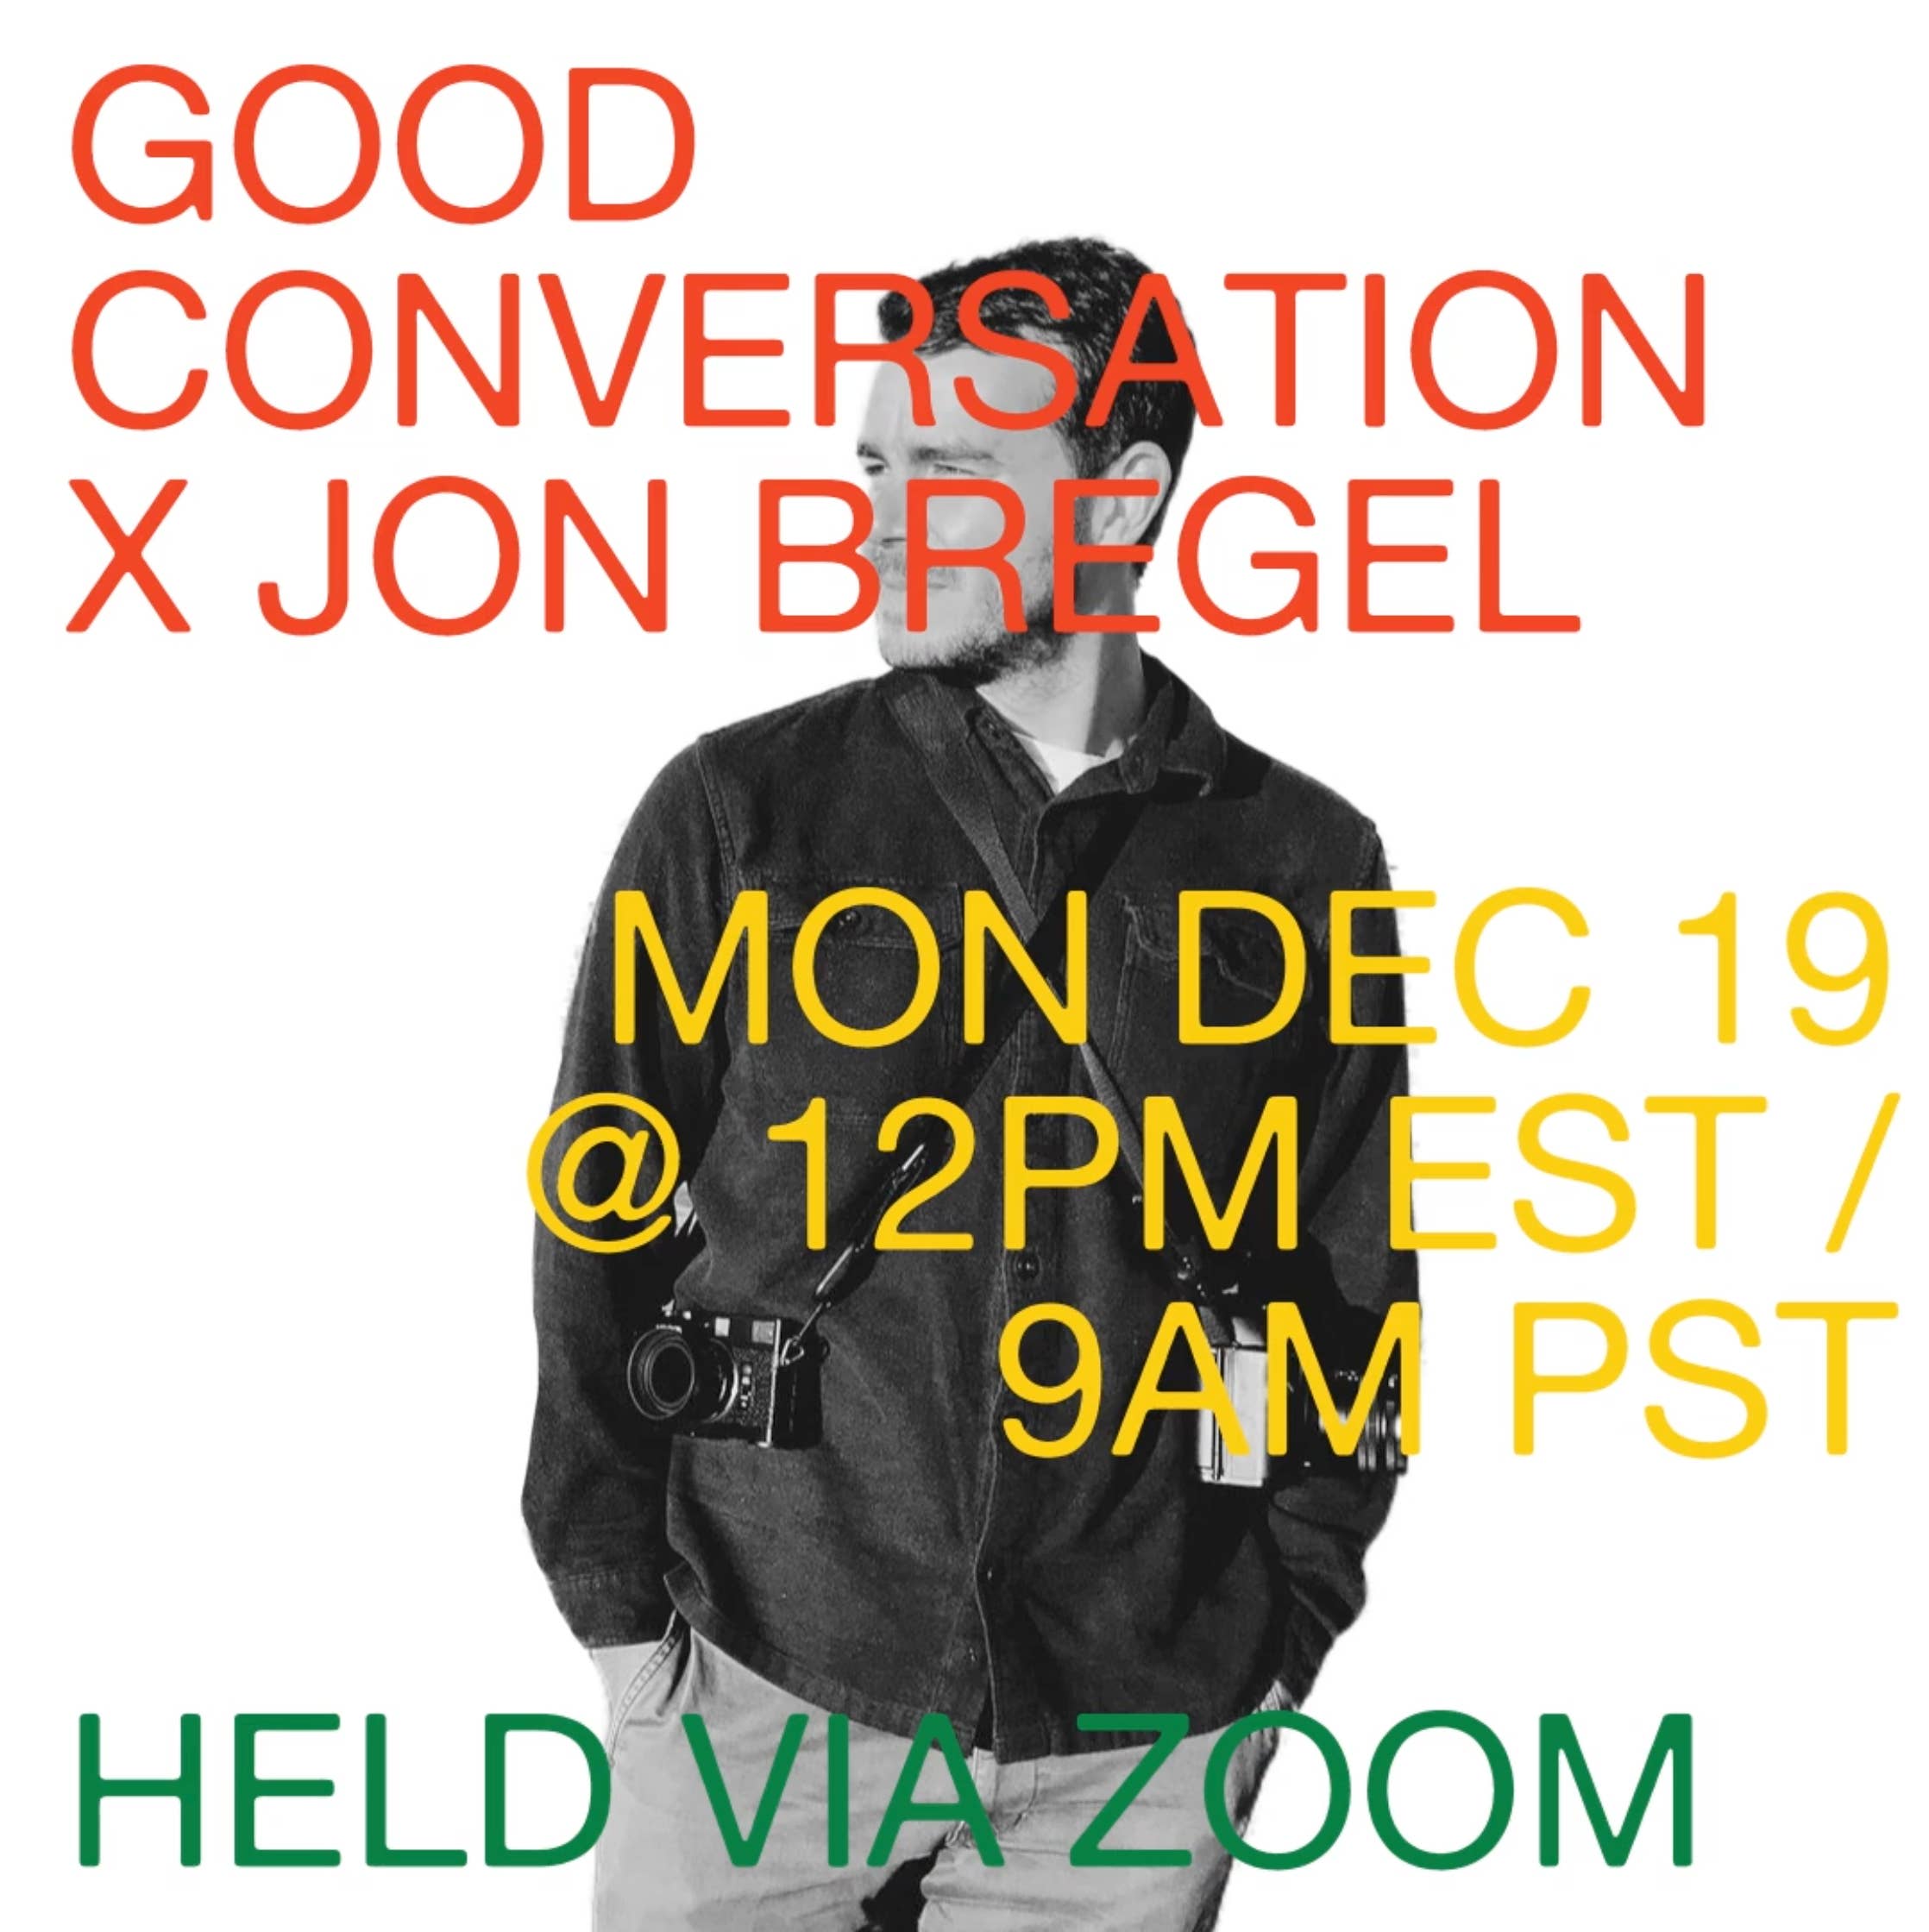 Good Conversation x Jon Bregel